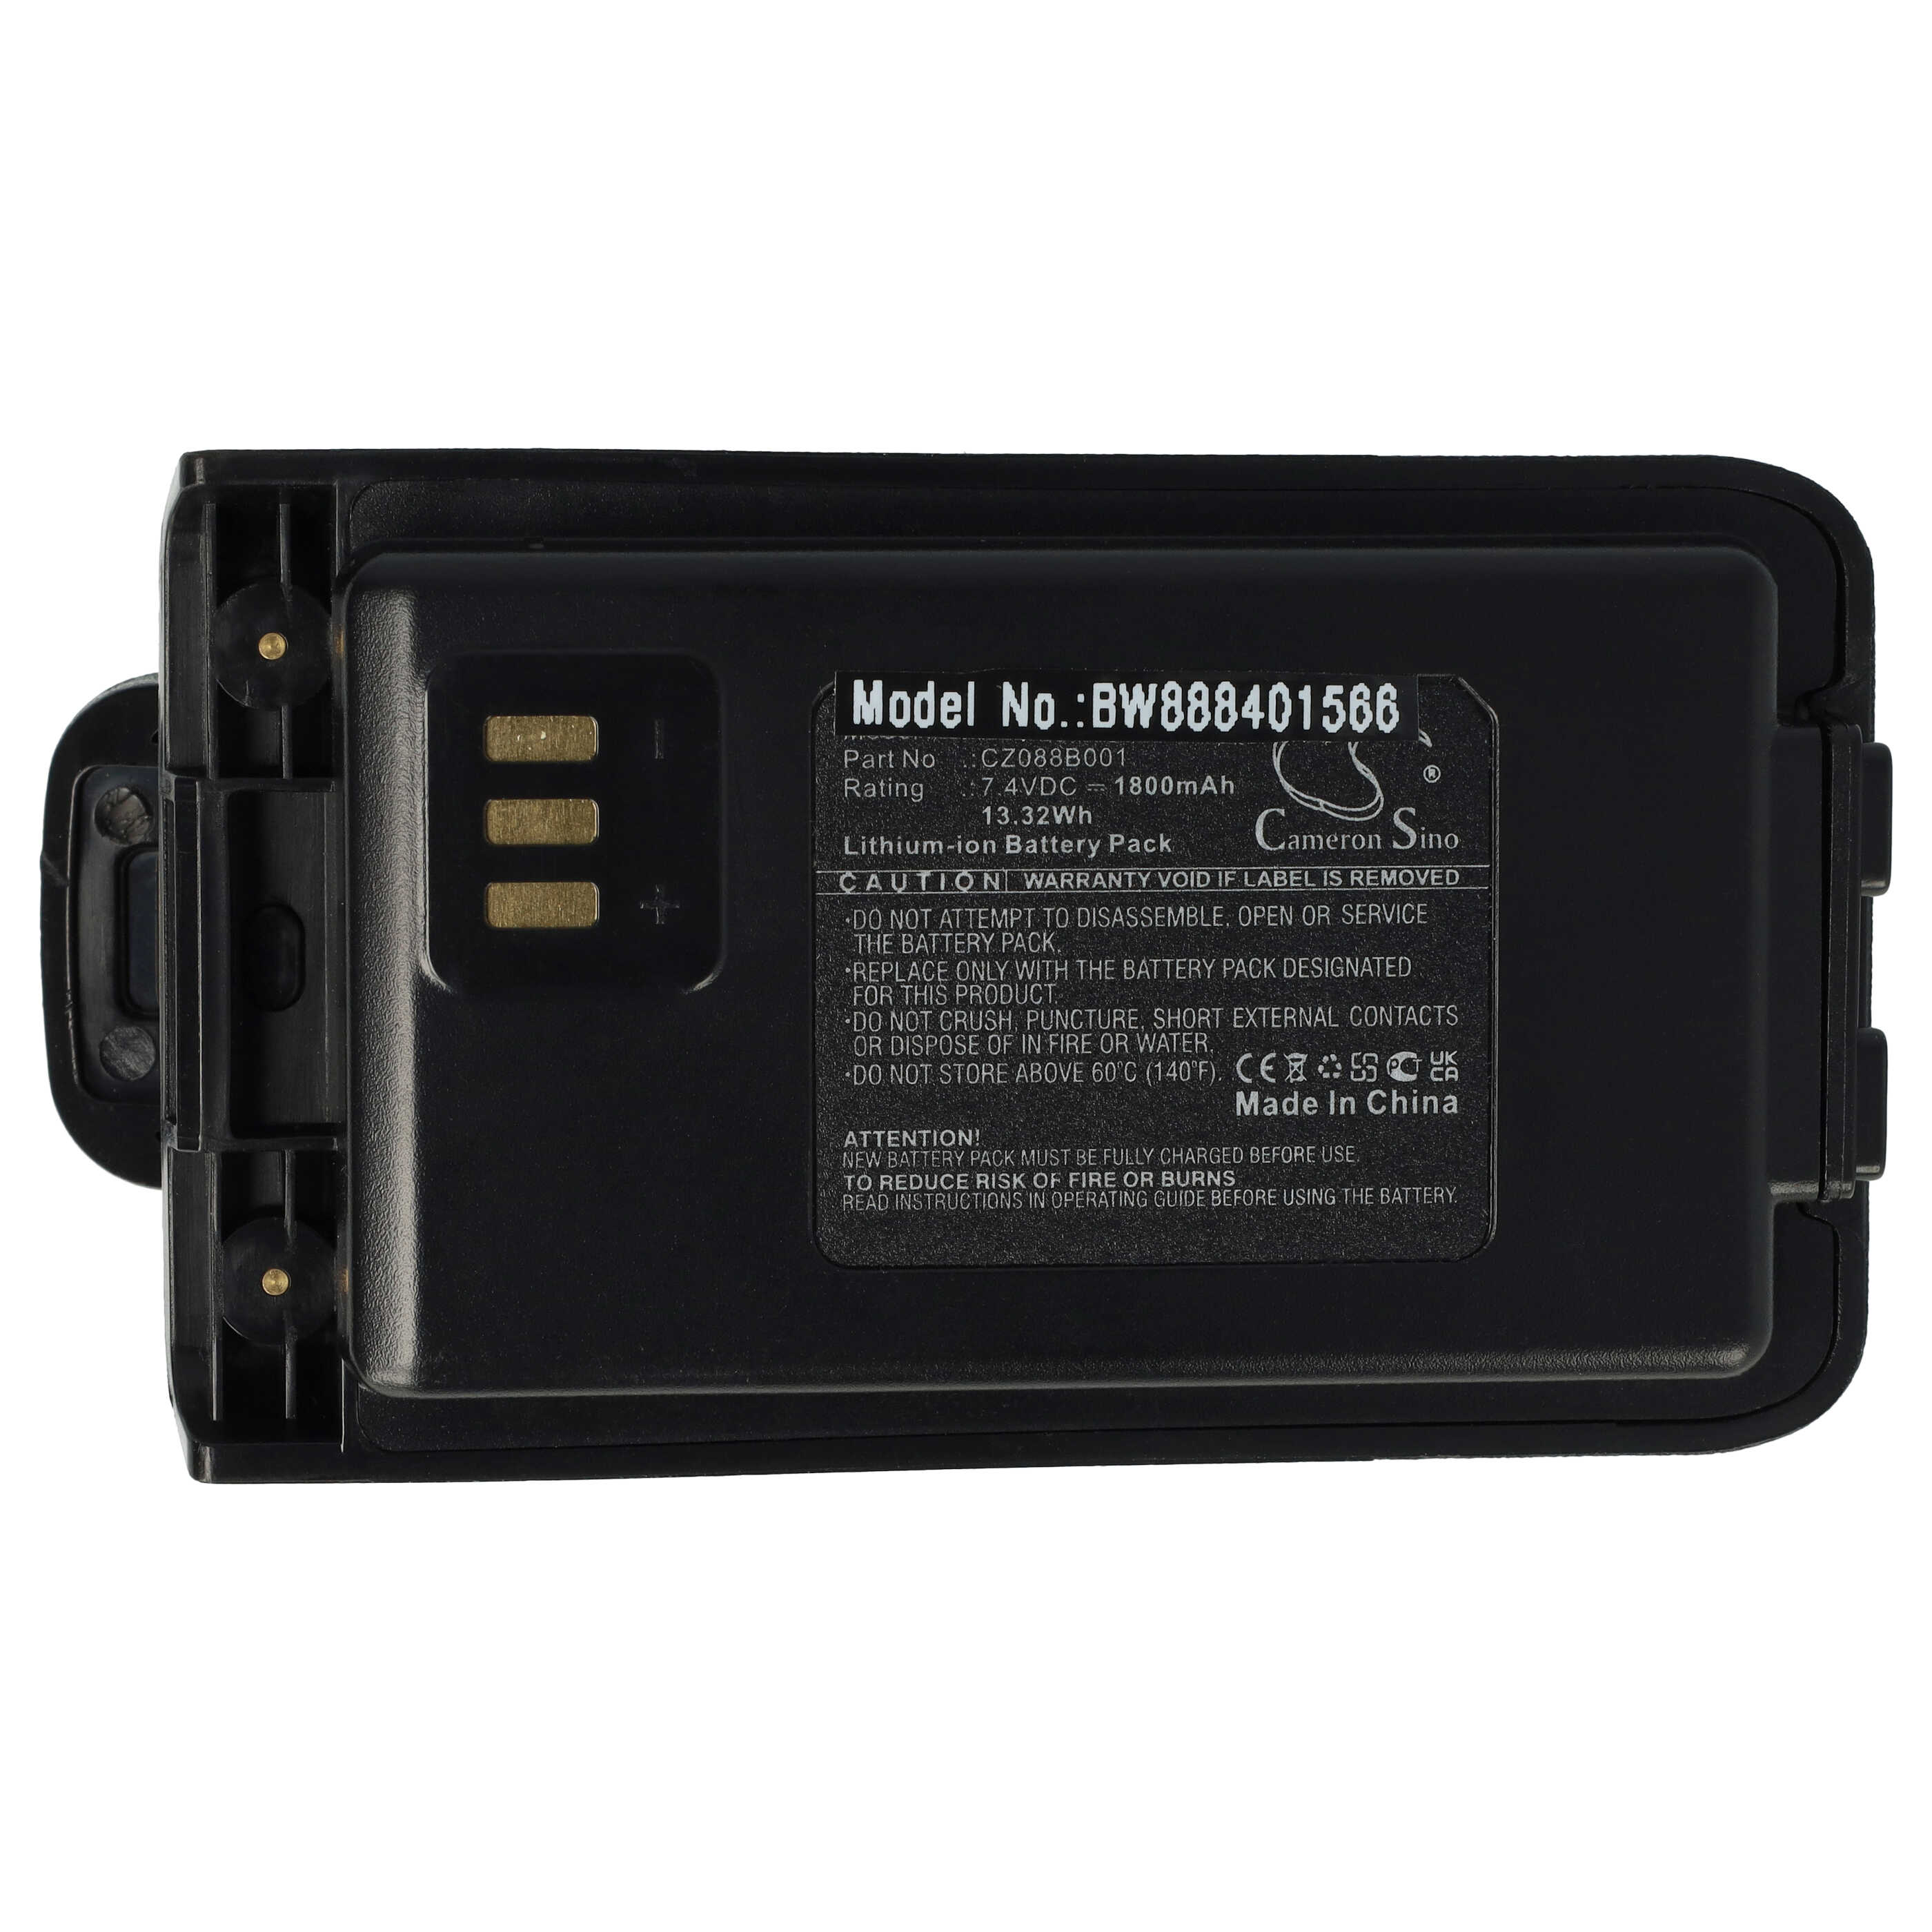 Akumulator do radiotelefonu zamiennik Motorola CZ088B001 - 1800 mAh 7,4 V Li-Ion + klips na pasek